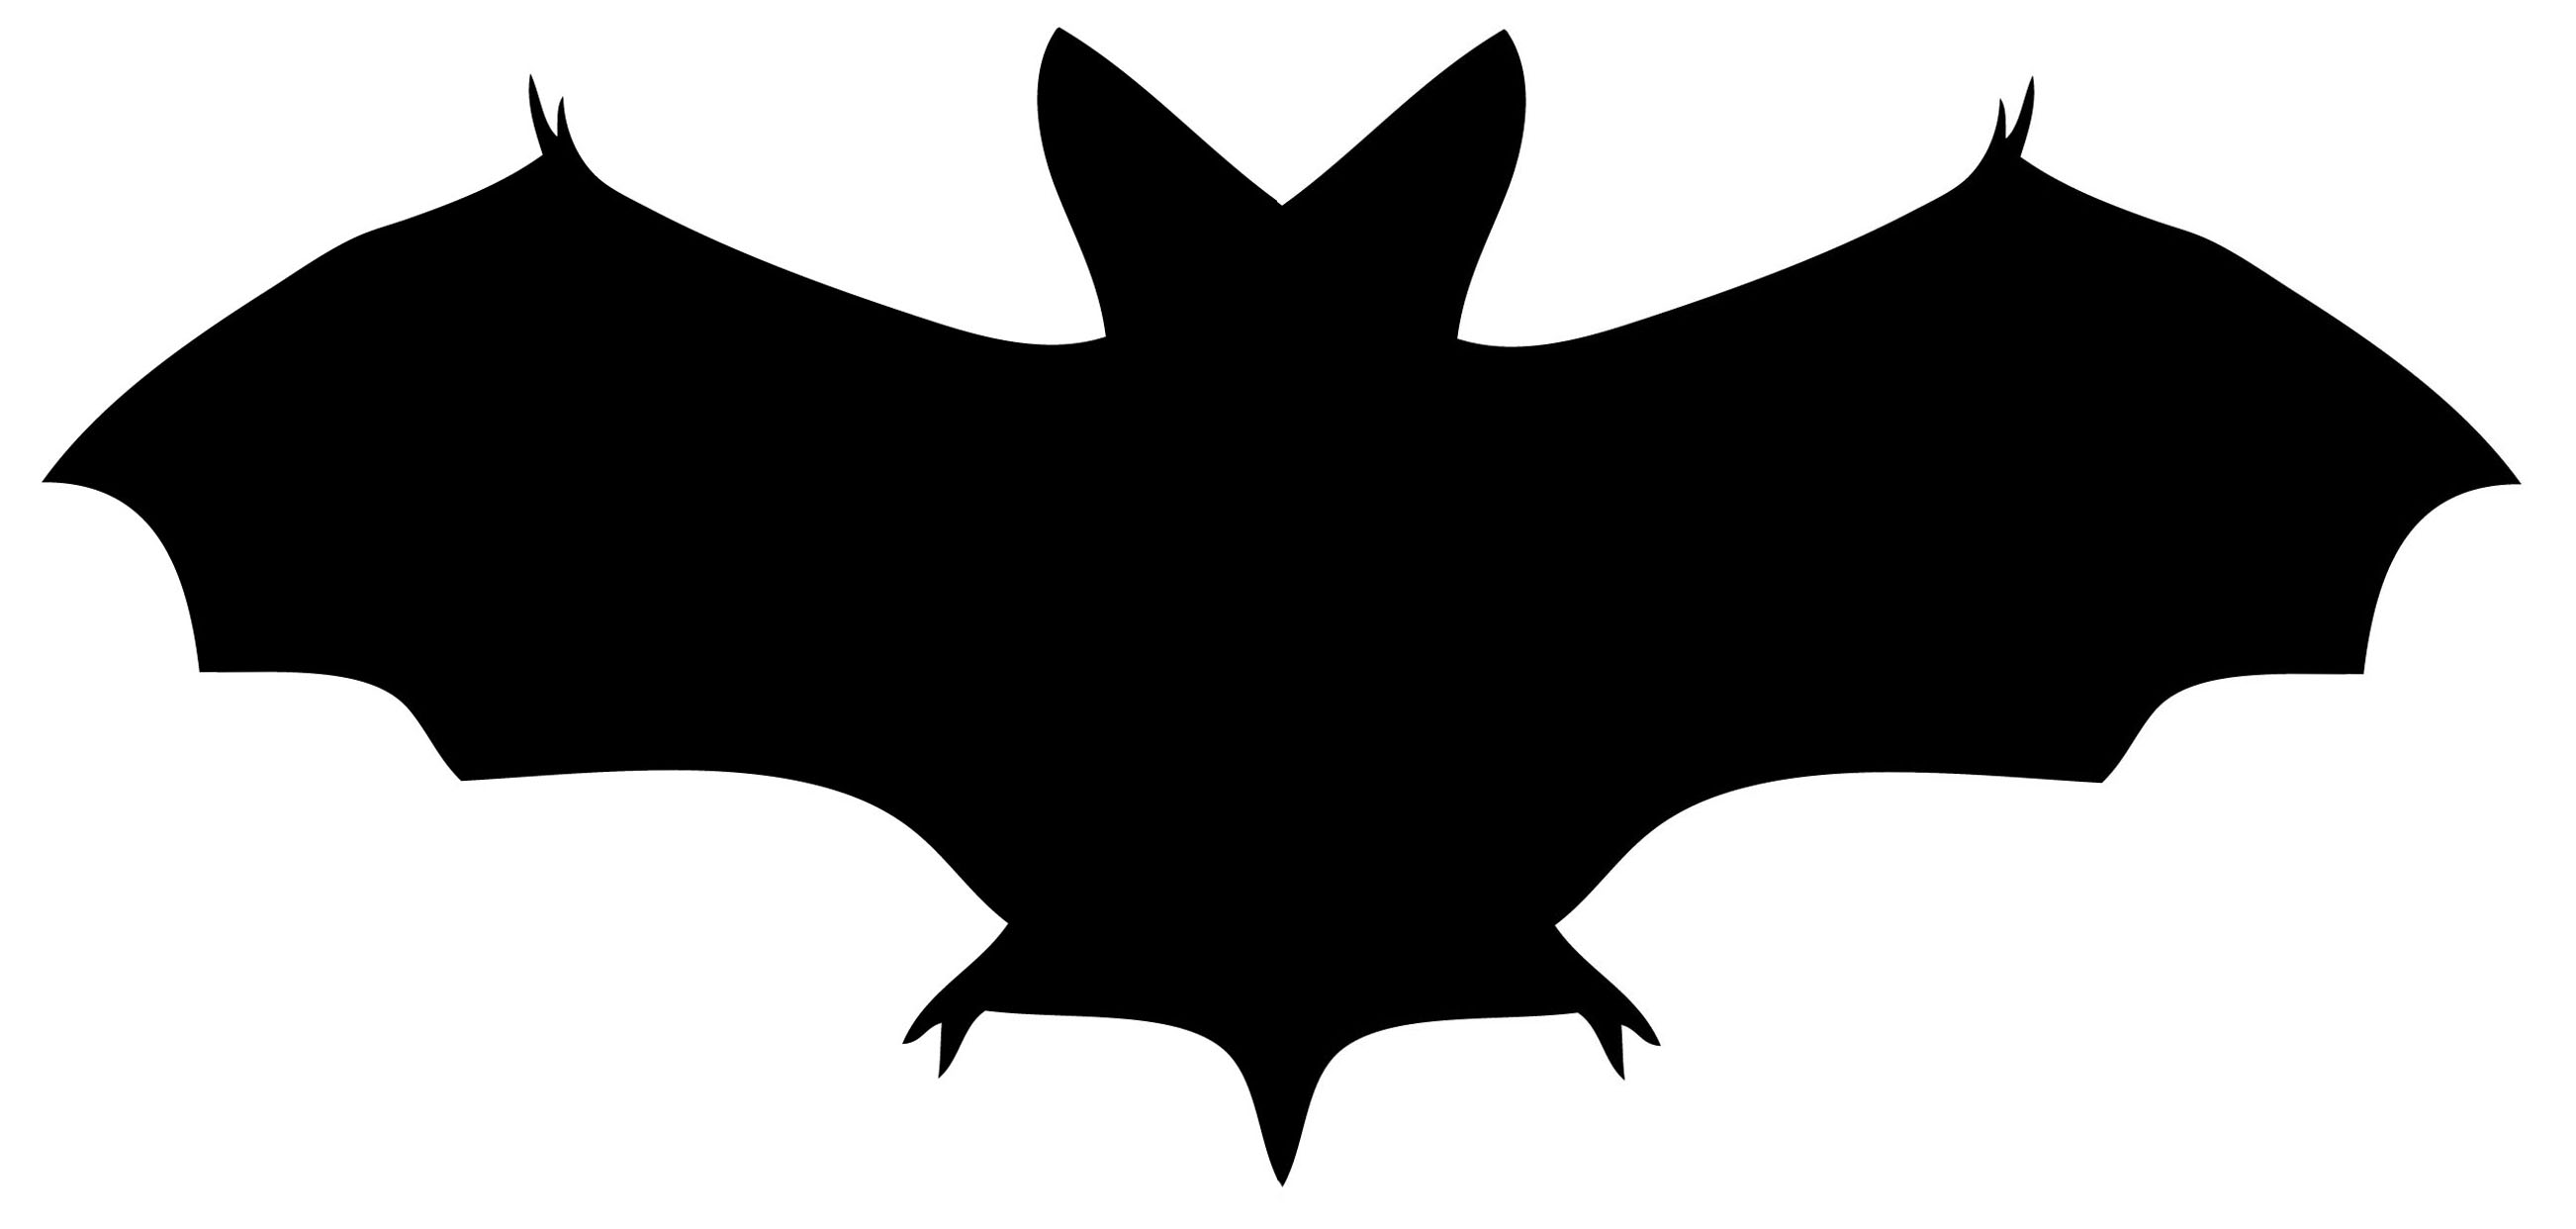 14 Bat Clip Art Images: (Vintage Halloween)! - The Graphics Fairy